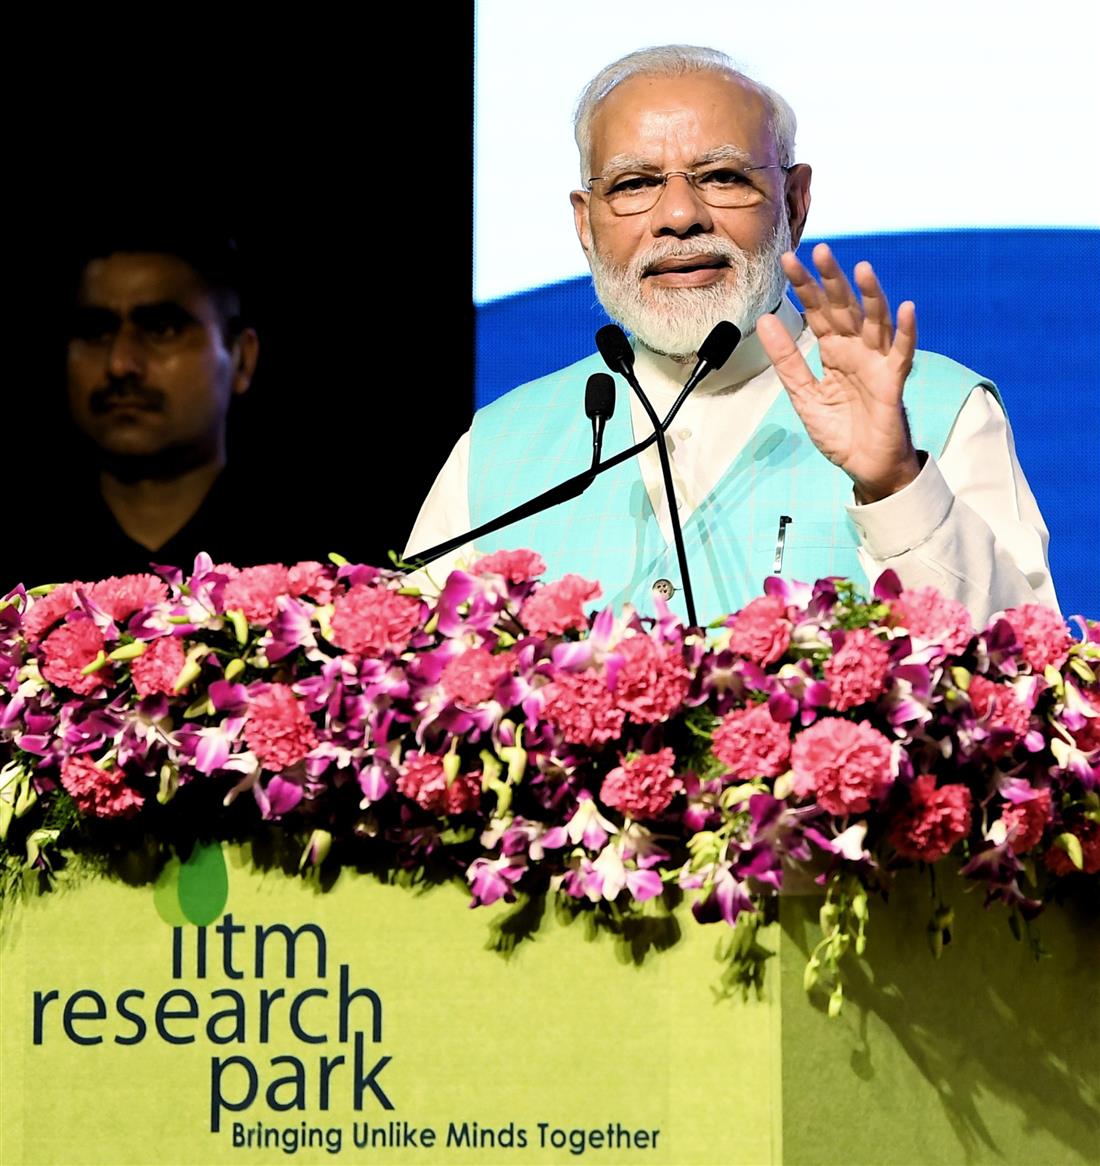 The Prime Minister, Shri Narendra Modi addressing the Singapore India Hackathon 2019, at IIT Madras, in Chennai on September 30, 2019.